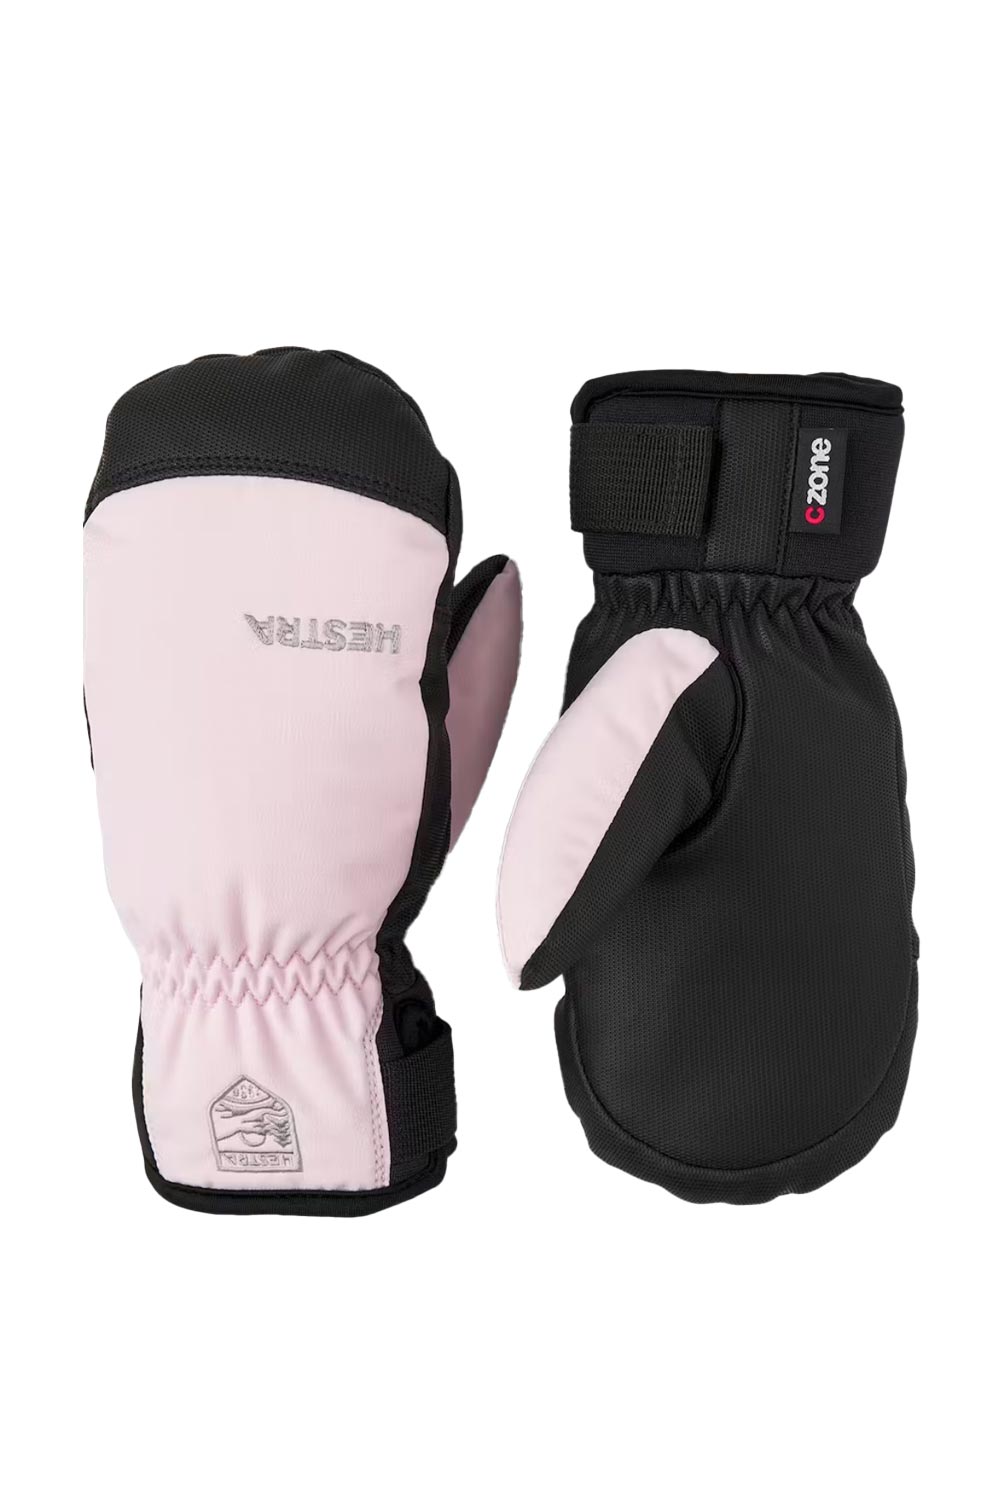 kids Hestra ski mitten, pink and black